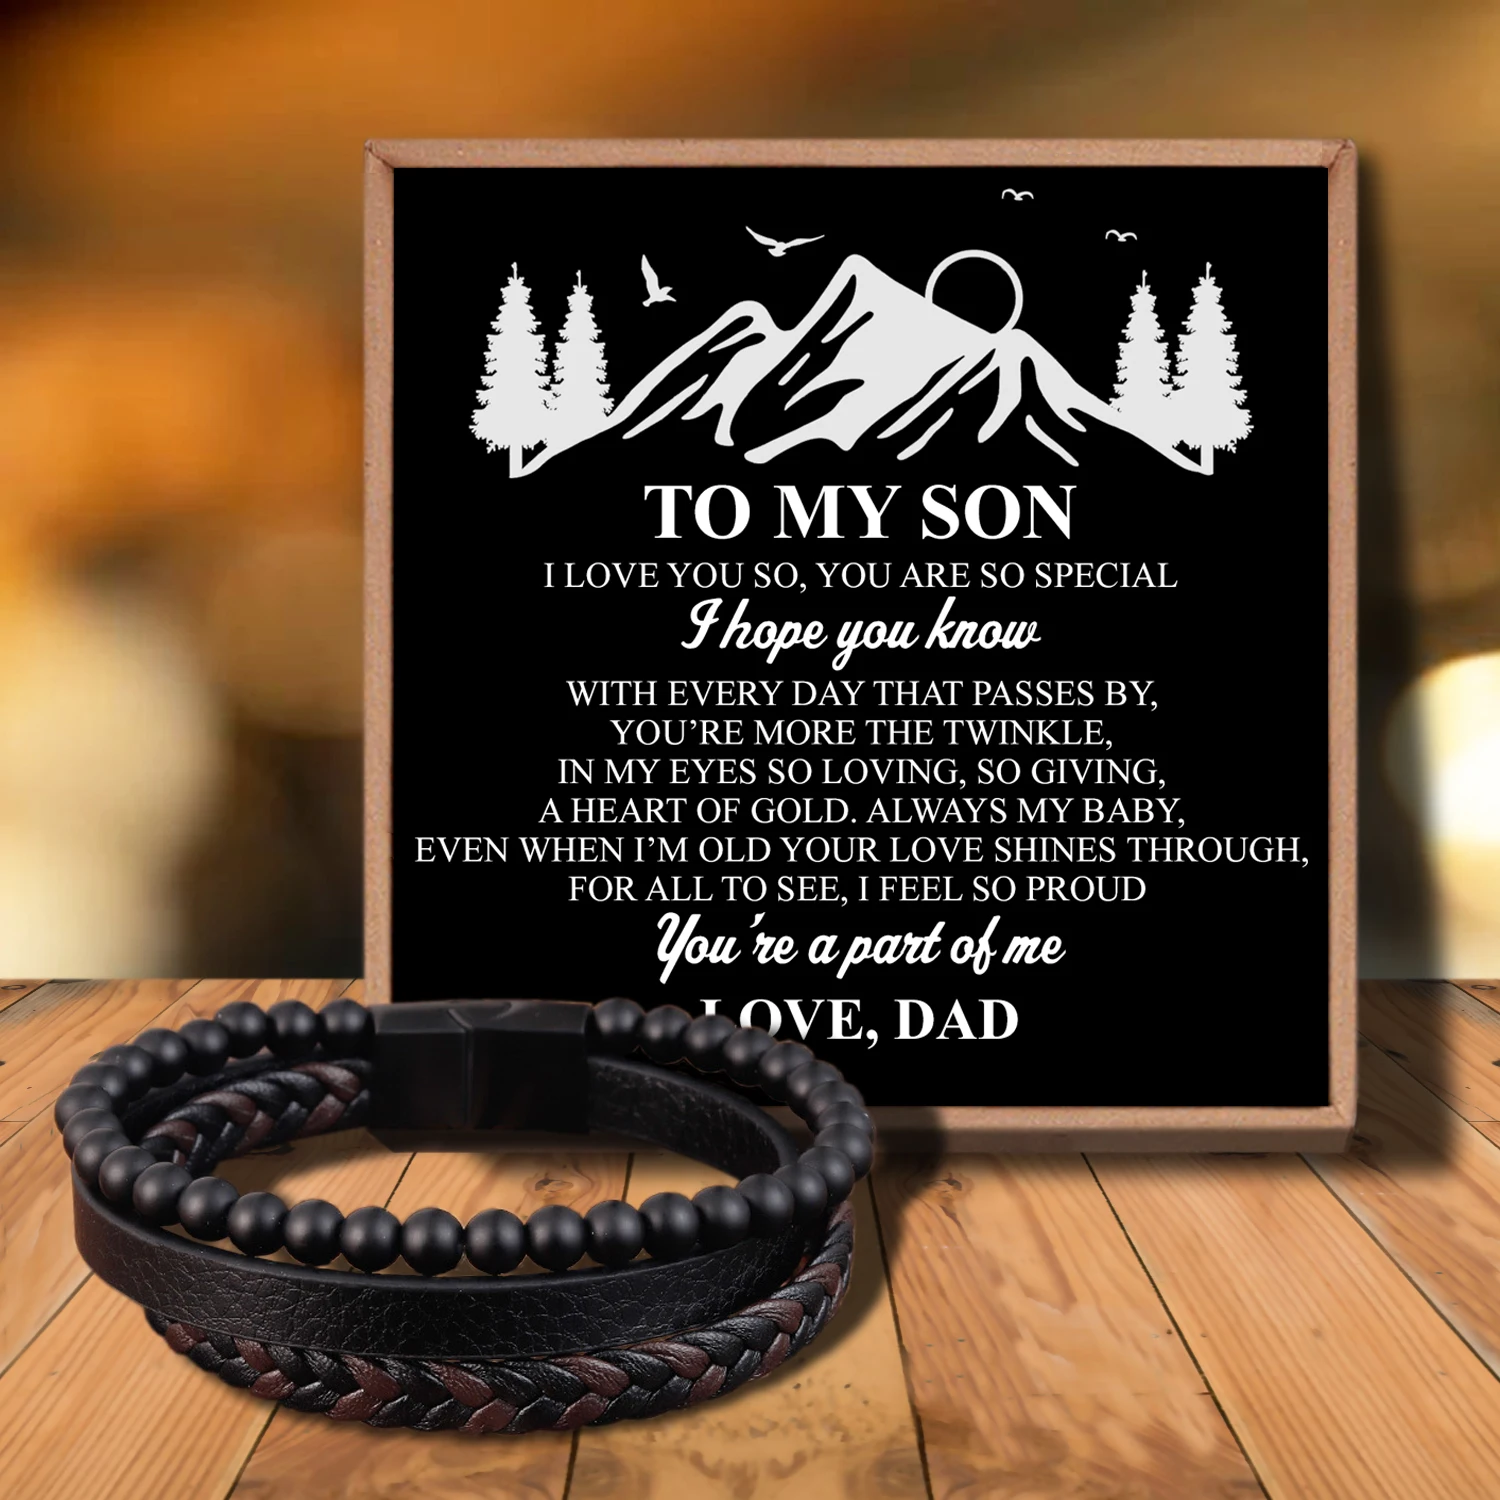 

Sab3020 Dad To My Son Men's Black Onyx Stone Strength Calming Healing Bracelet-Spiritual Protection Balance Meditation Bracelet